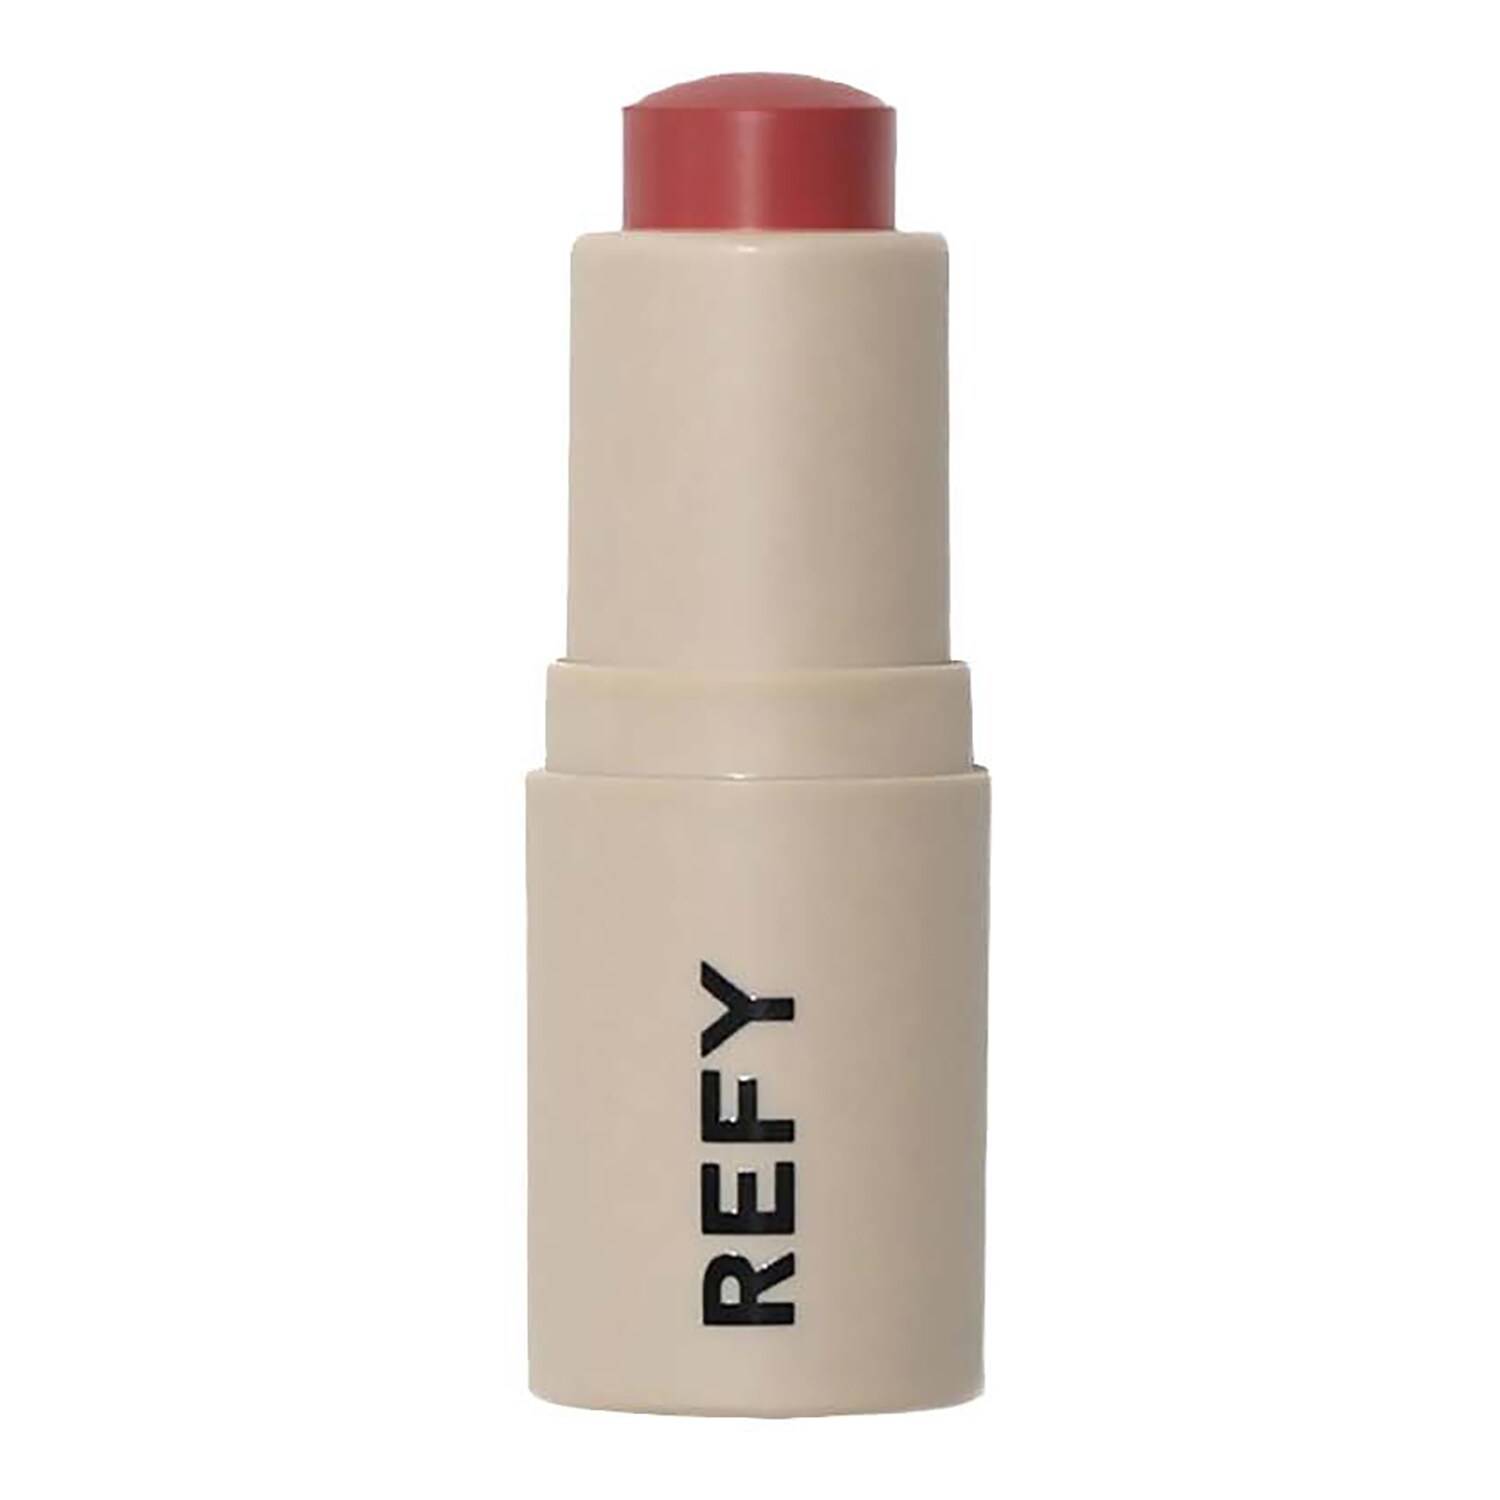 Refy + Lip Blush